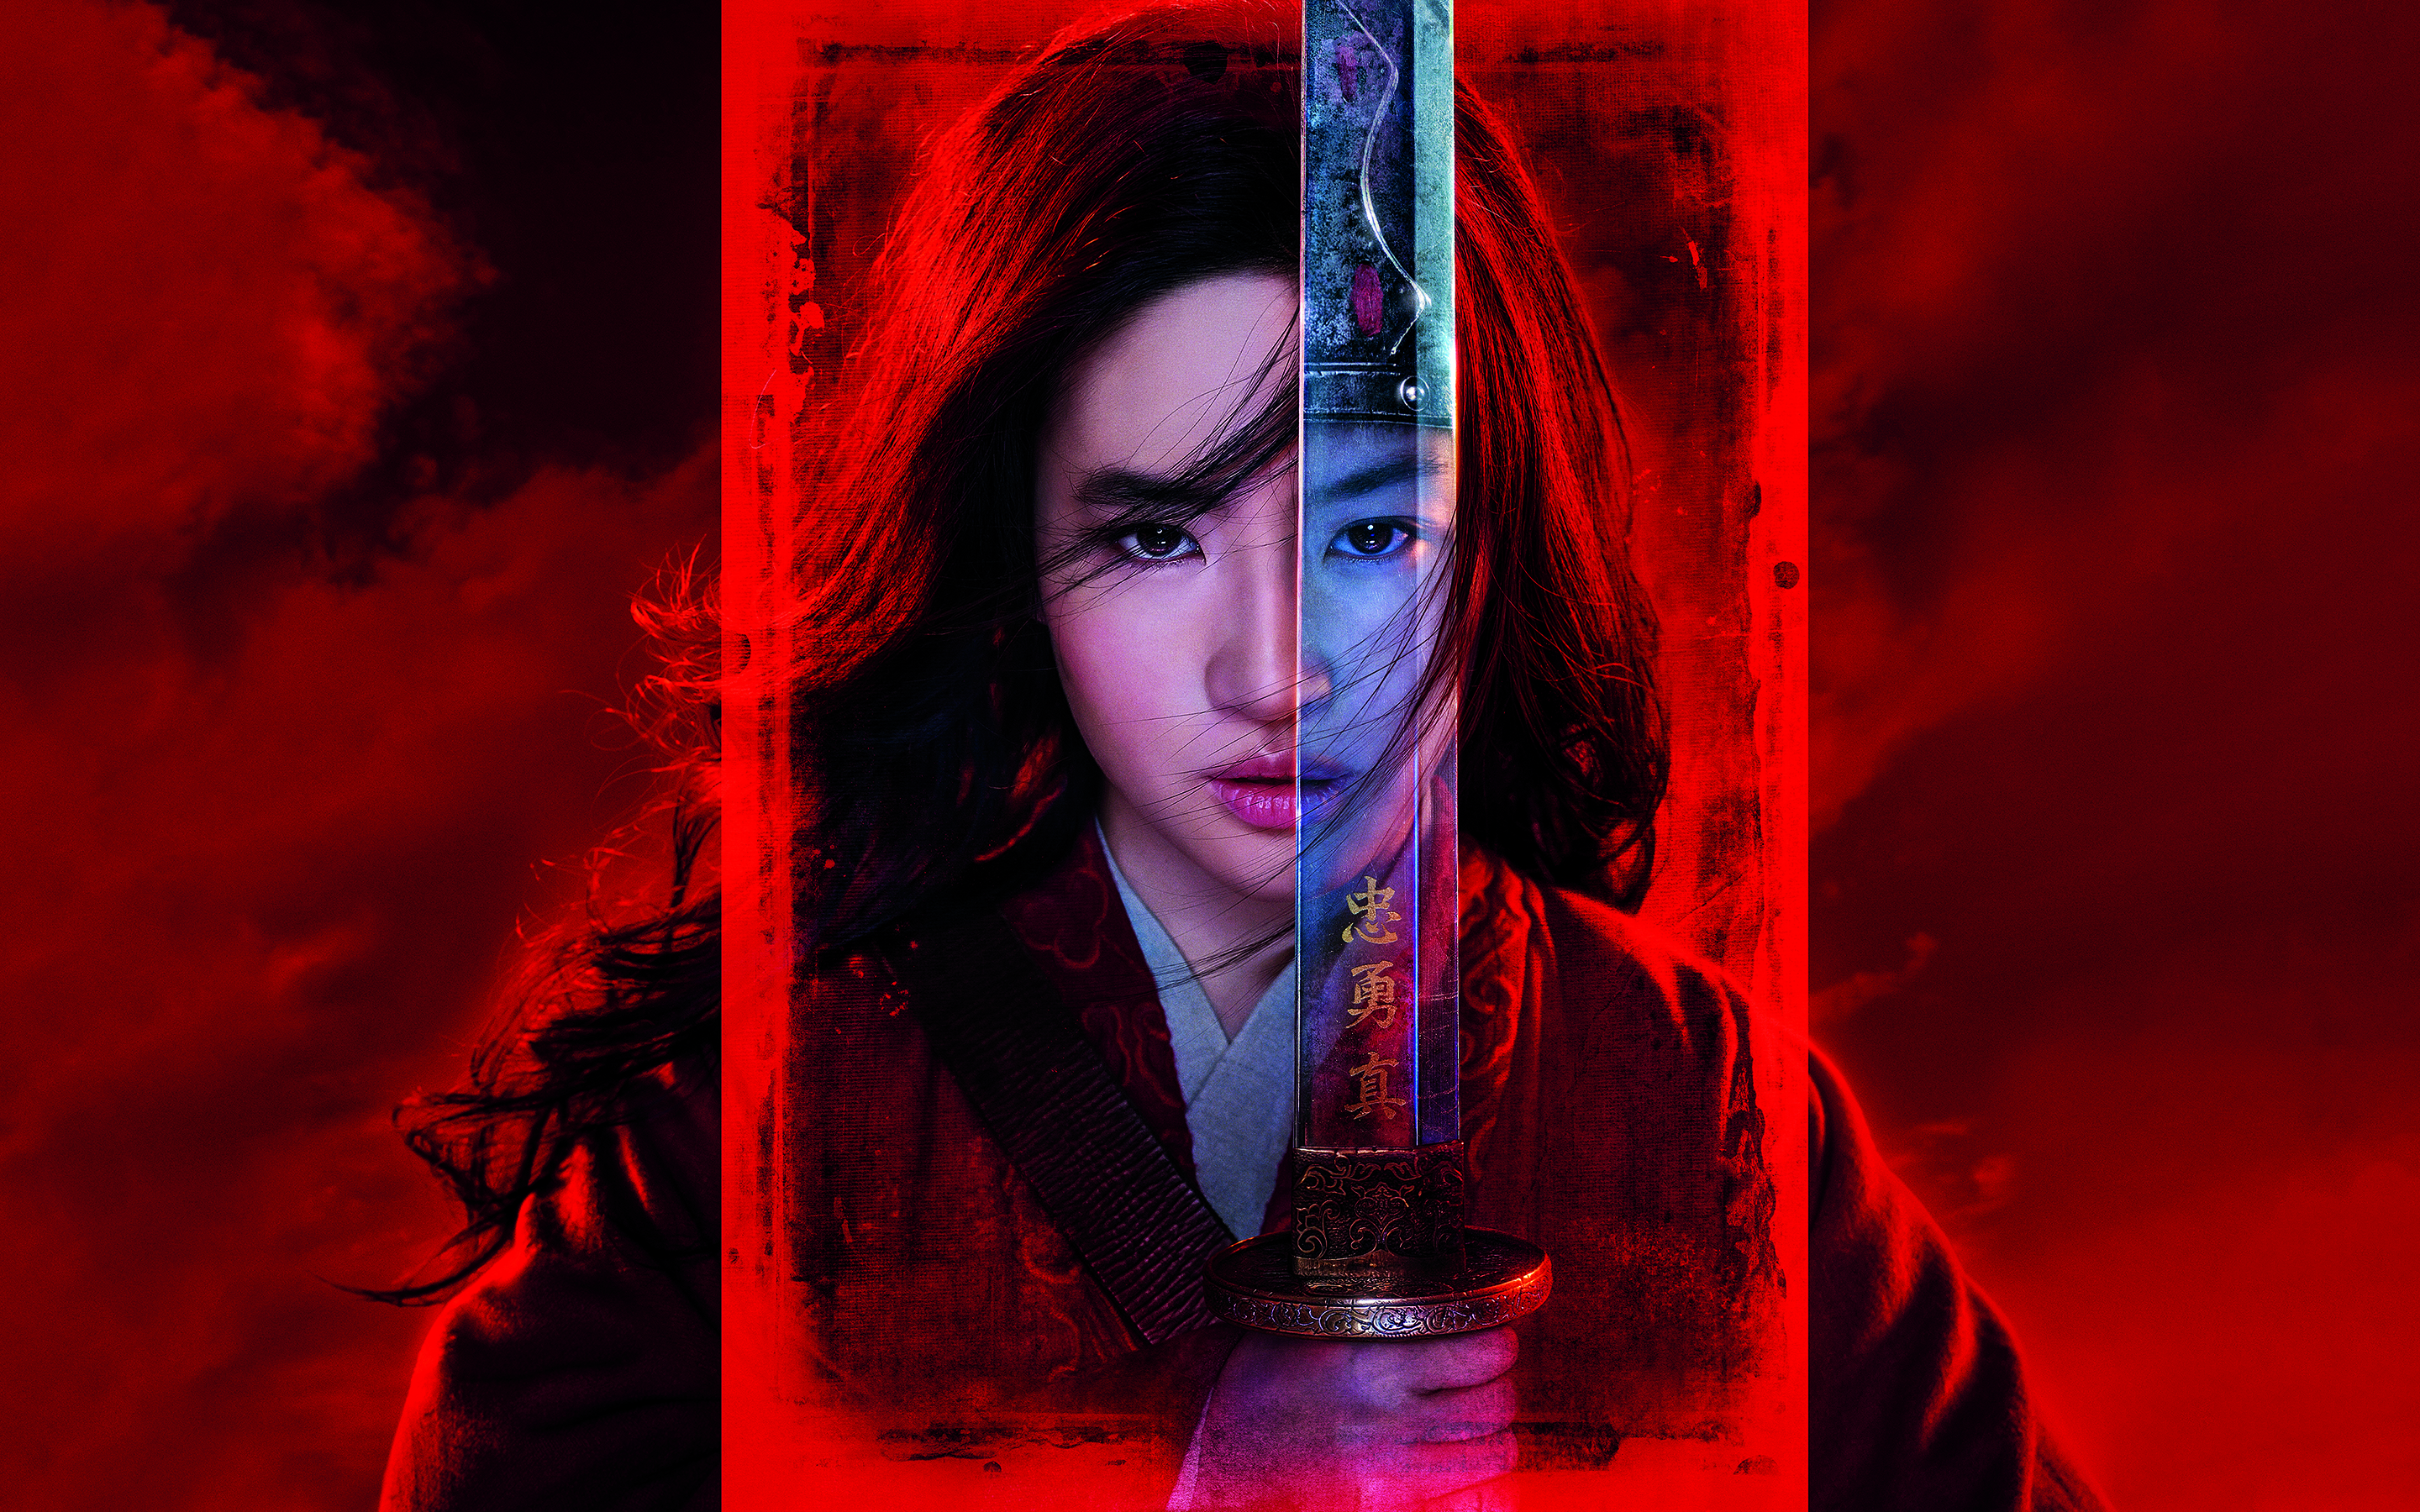 General 2880x1800 Disney Mulan frontal view red movies actress Asian Yifei Liu